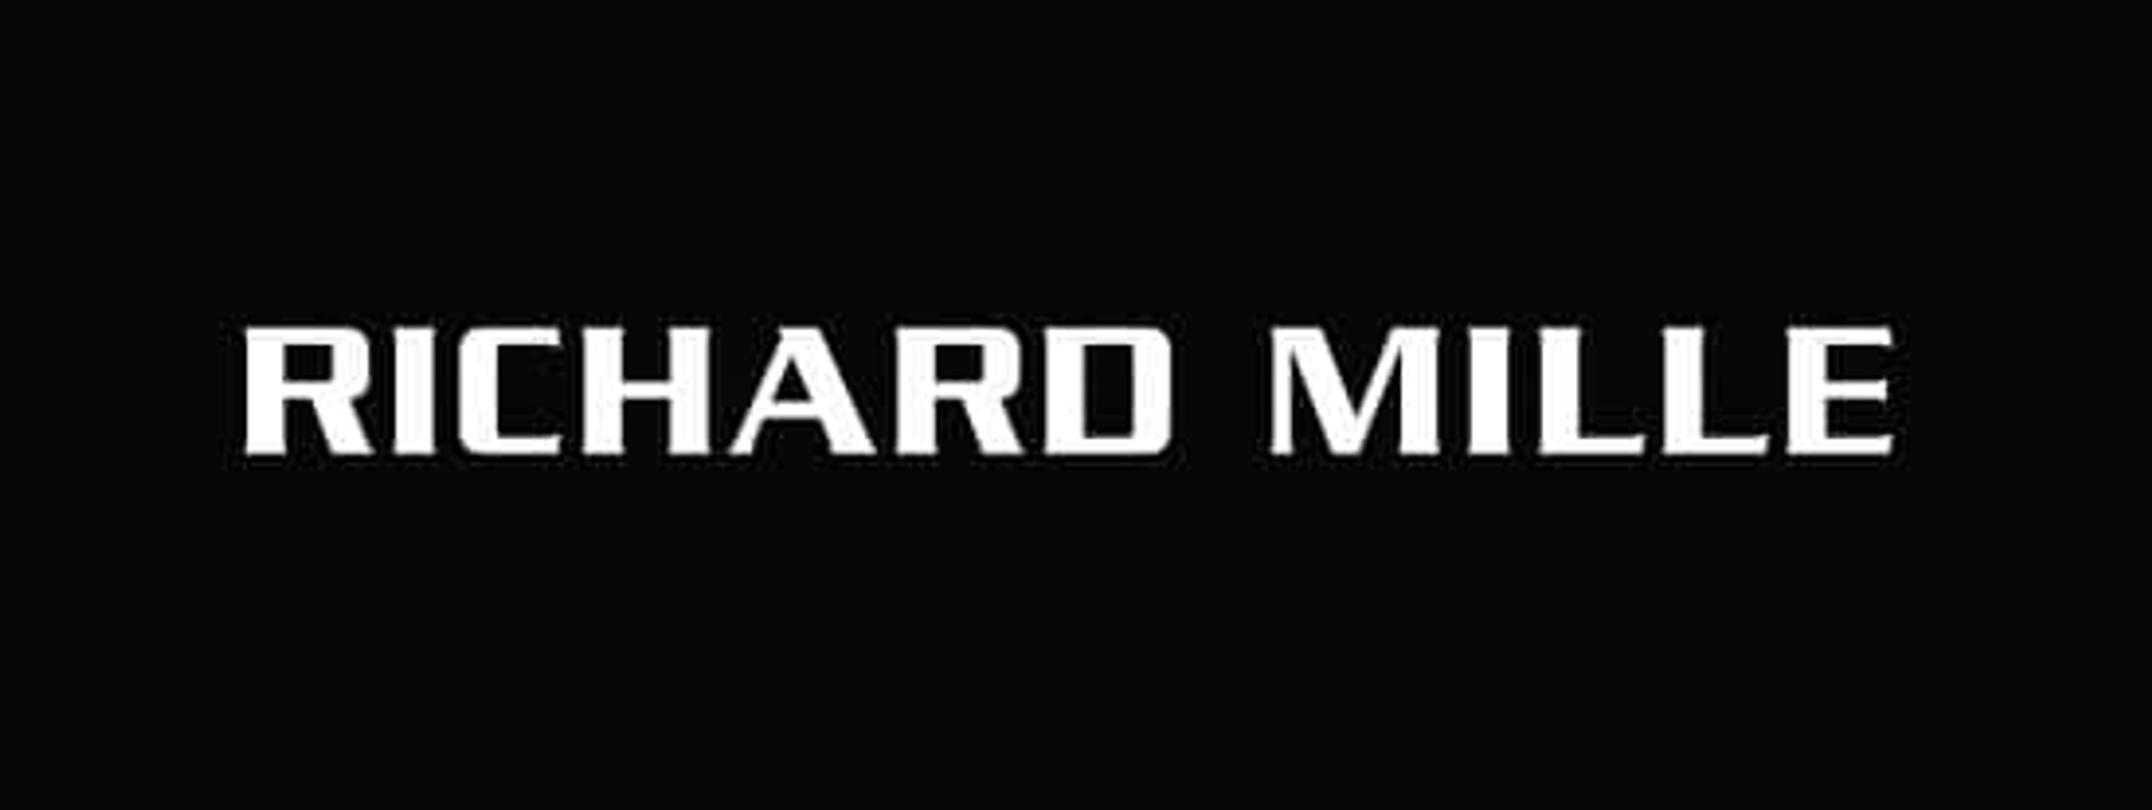 richard mille logo